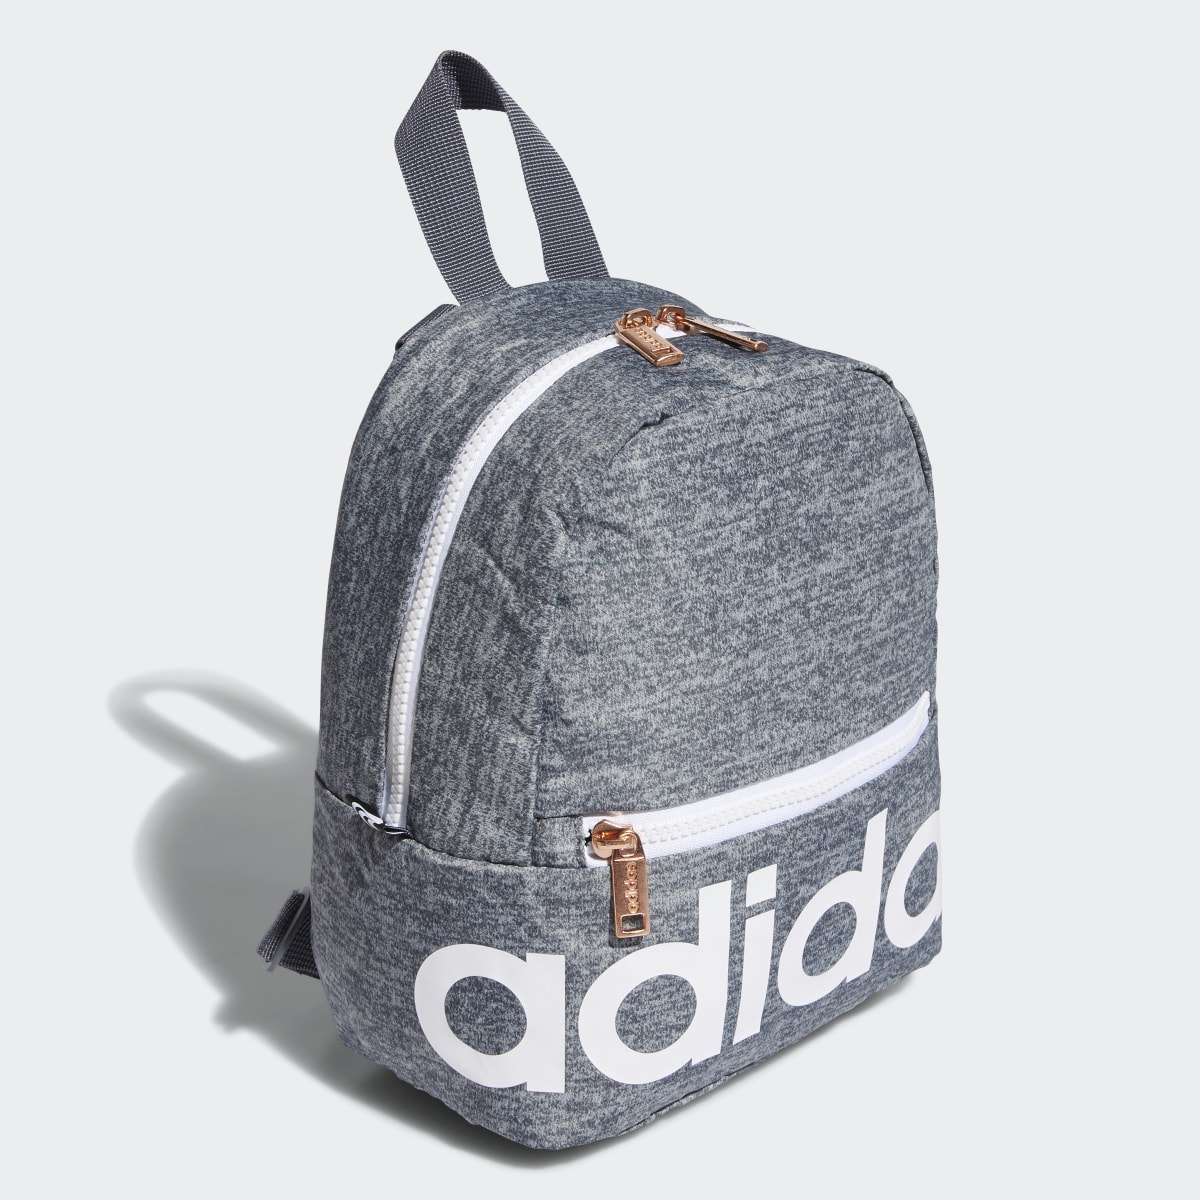 Adidas Linear Mini Backpack. 4